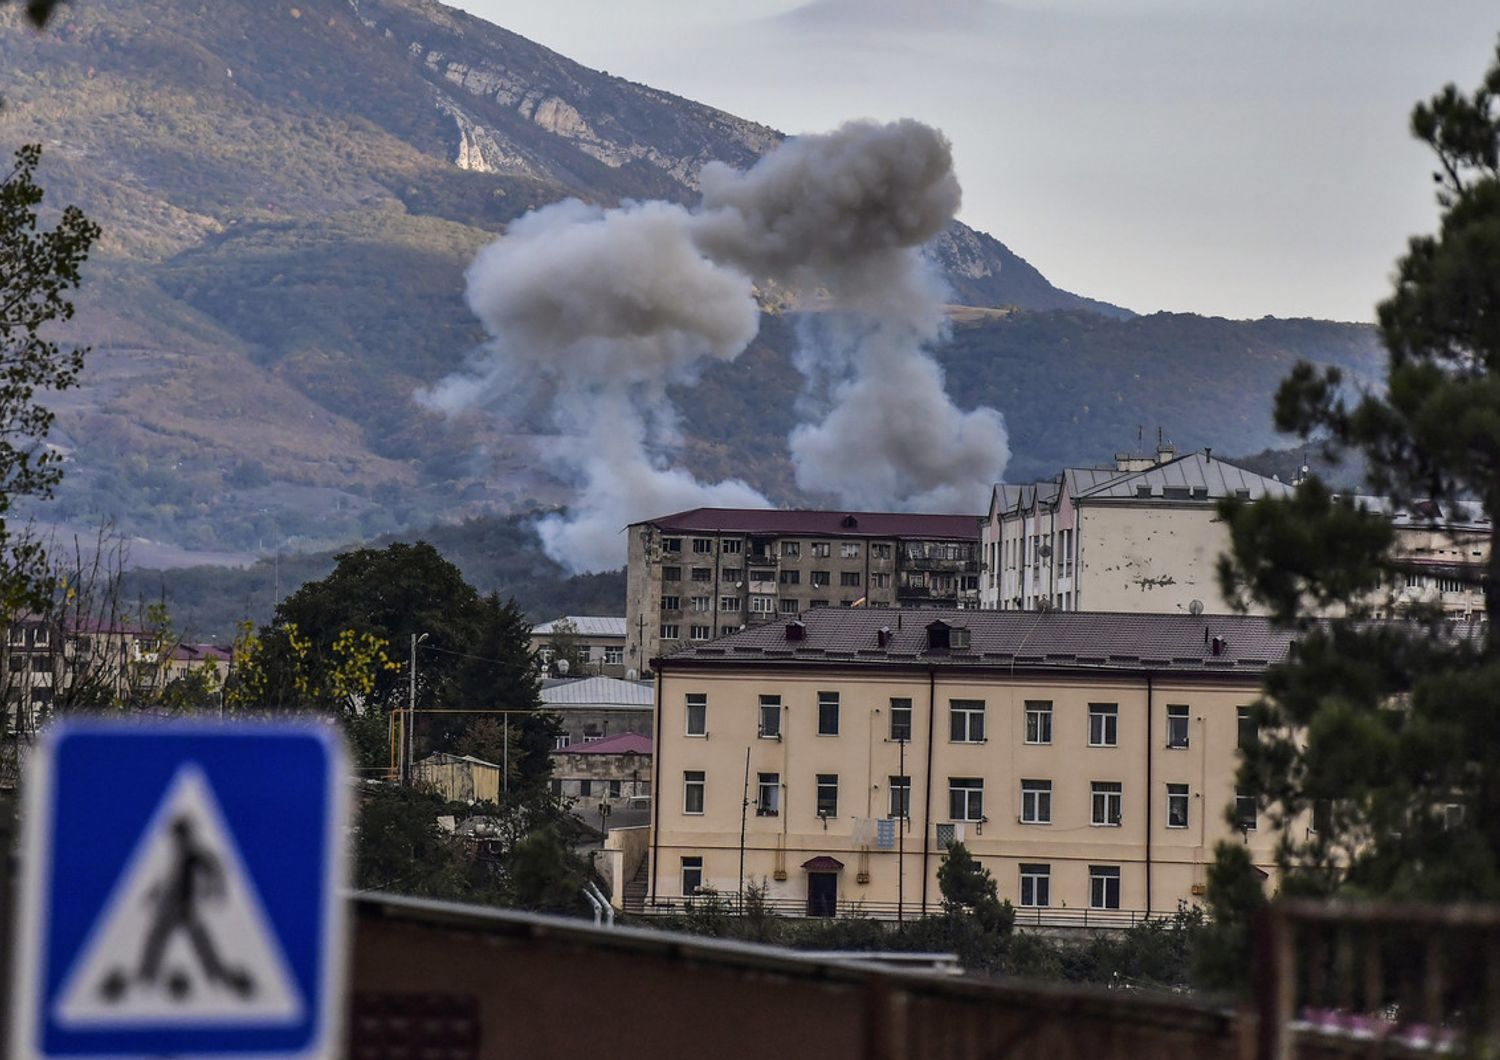 Bombardamenti su Stepanakert